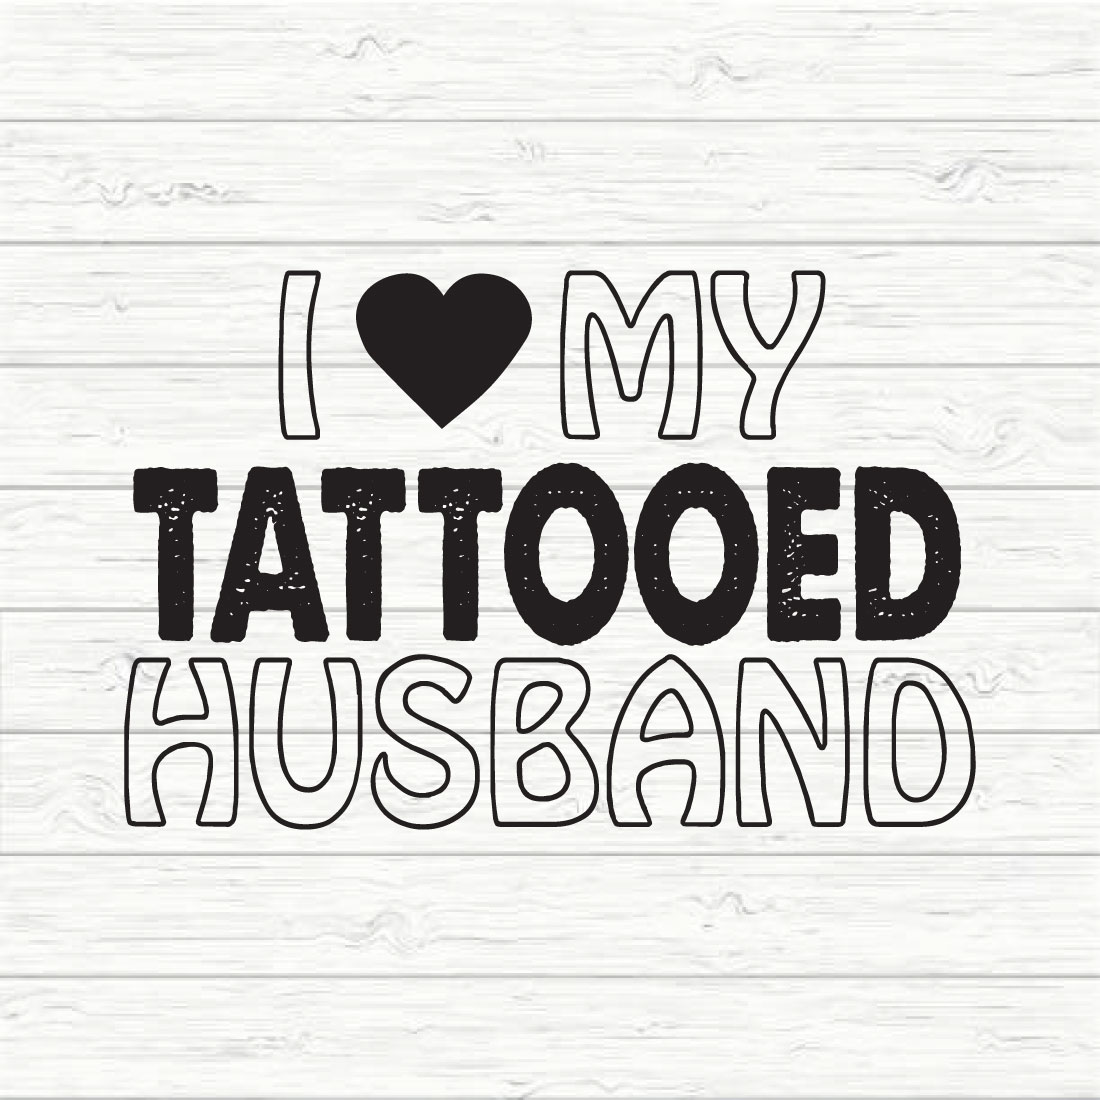 I Love My Tattooed Husband cover image.